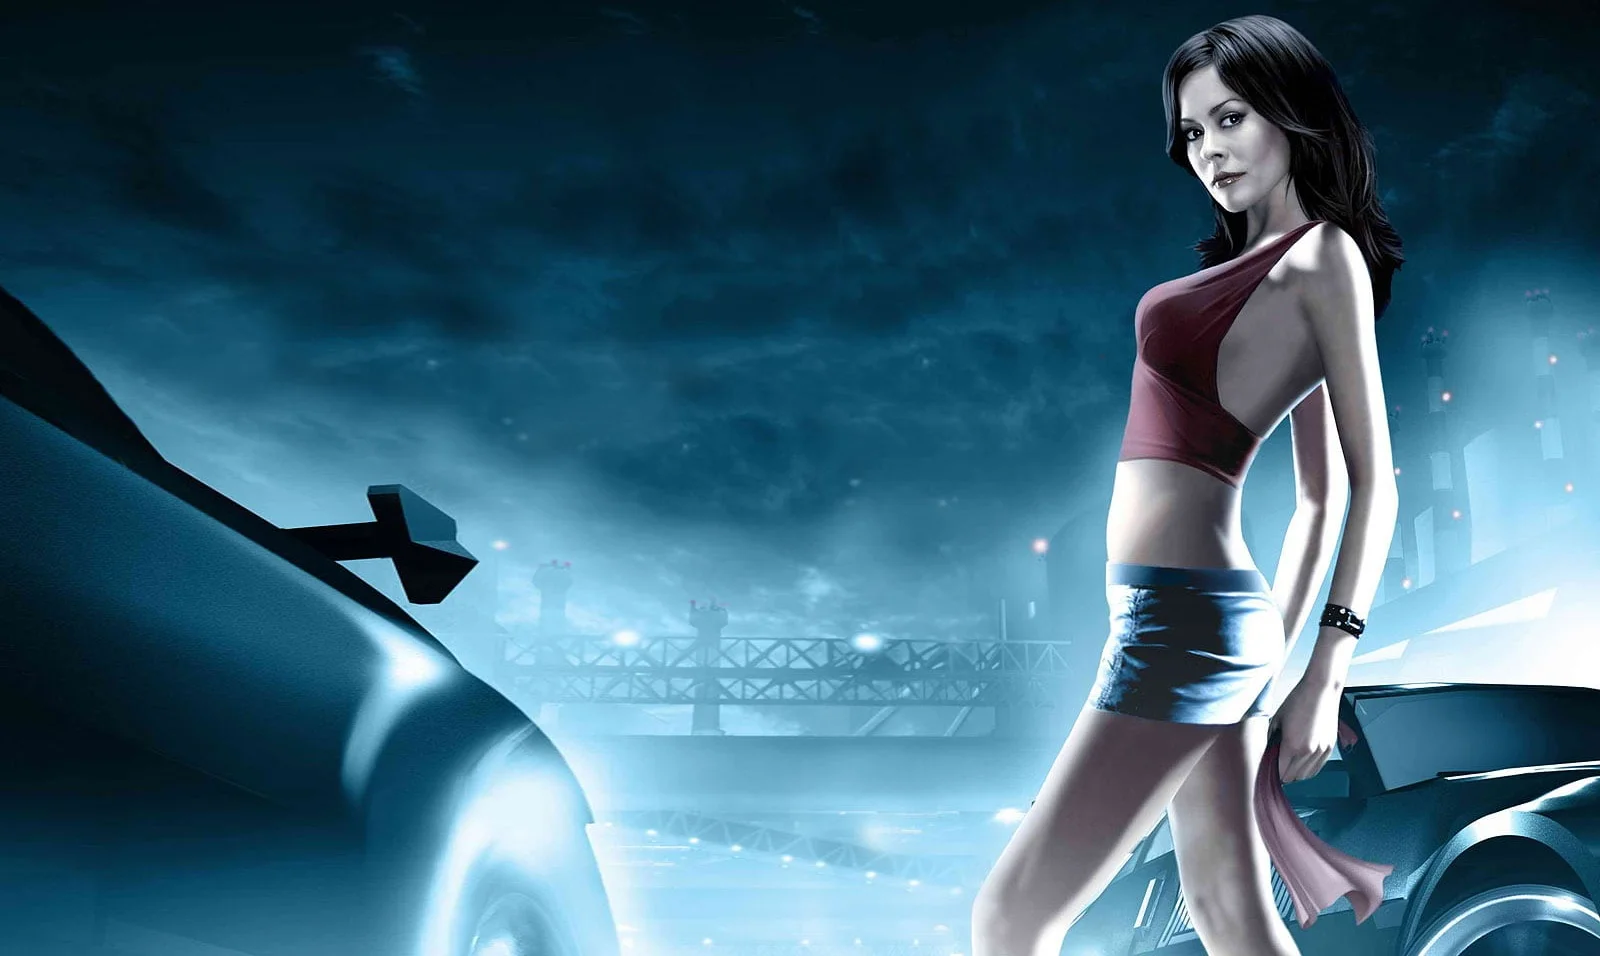 Визуальную составляющую Need for Speed Underground 2 довели до некстгена